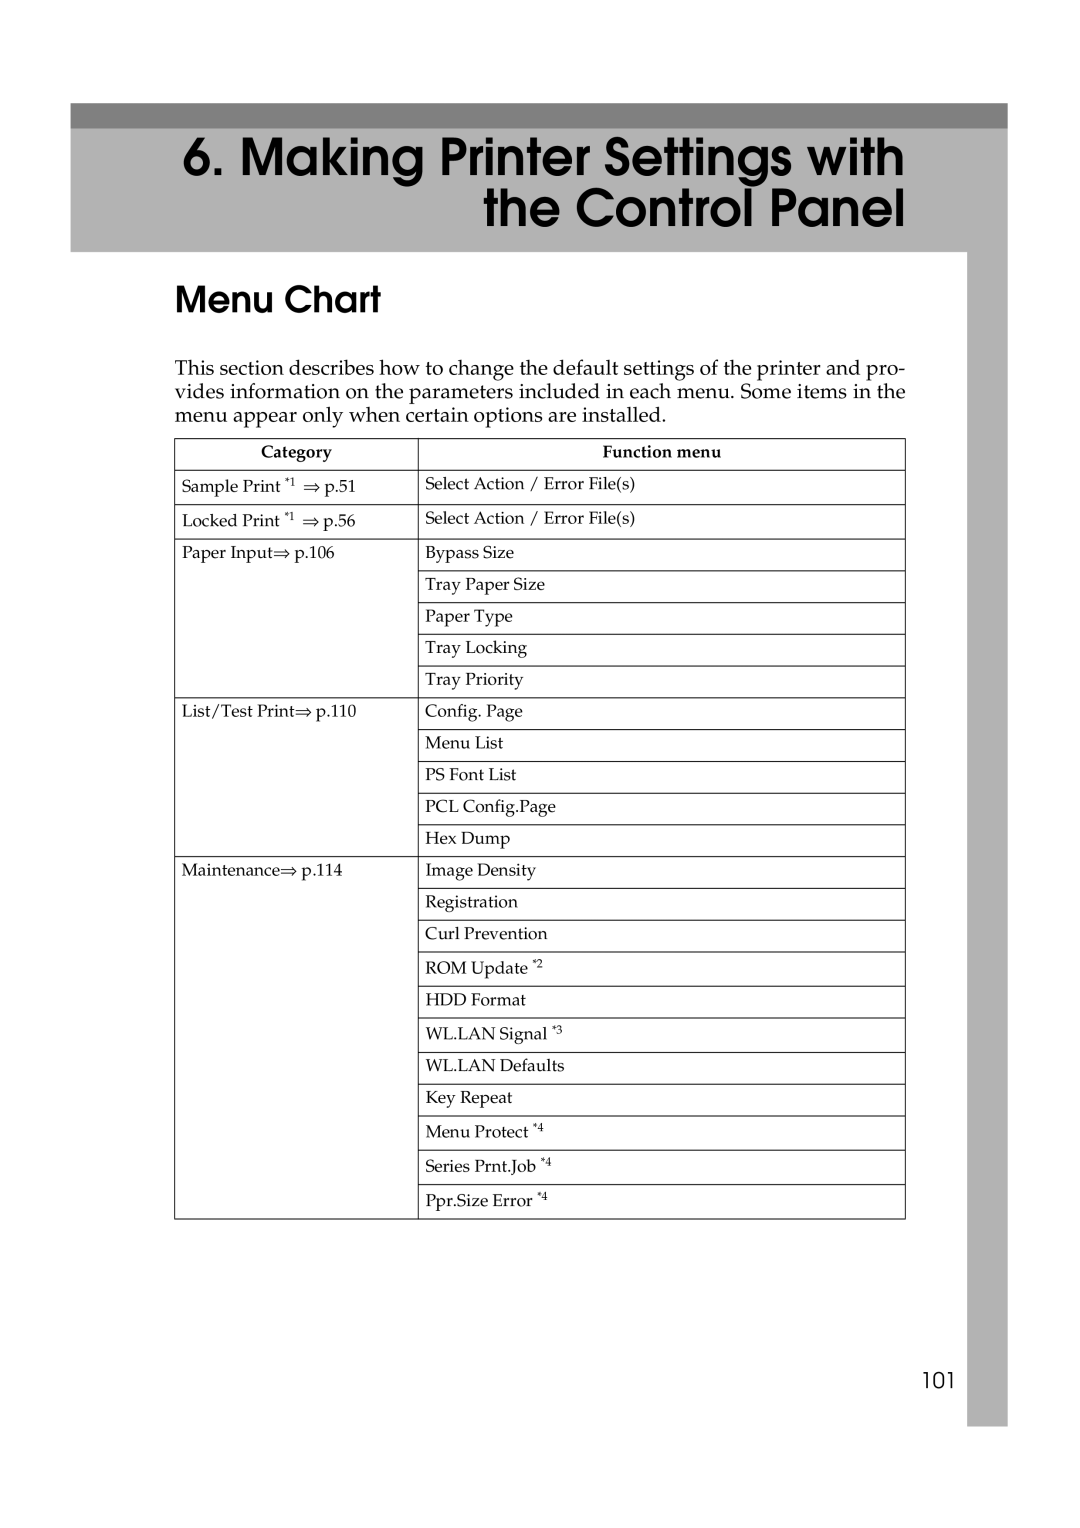 Lanier AP2610 manual Menu Chart, 101, Category Function menu 